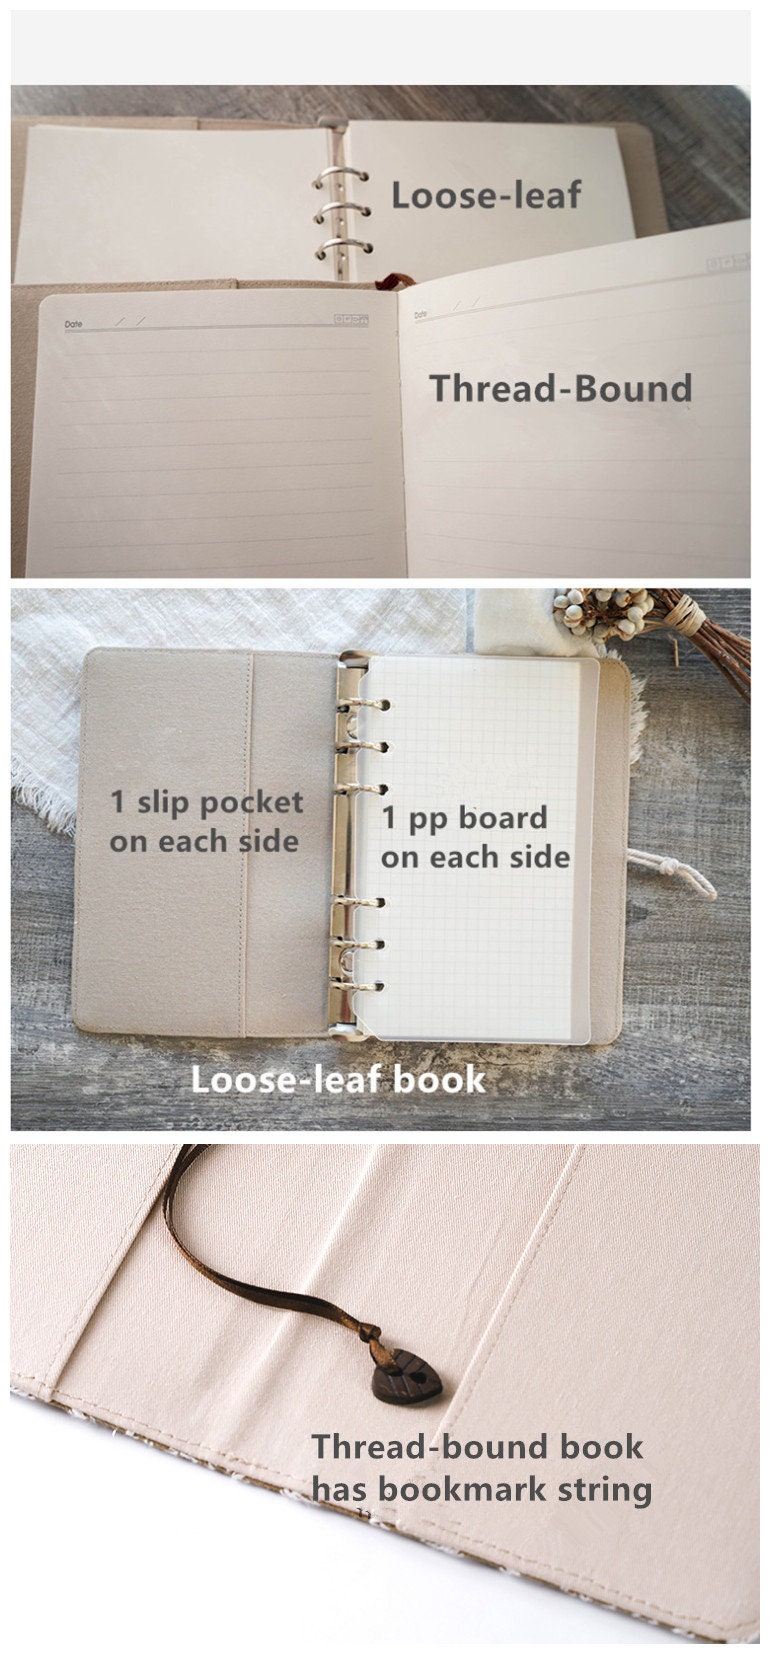 Ephemera Jasmine Embroidery Notebook Journal Handmade A5 A6 Fabric Cover Loose-leaf Thread-bound Literary Book Vantage Notebook Dairy Gift